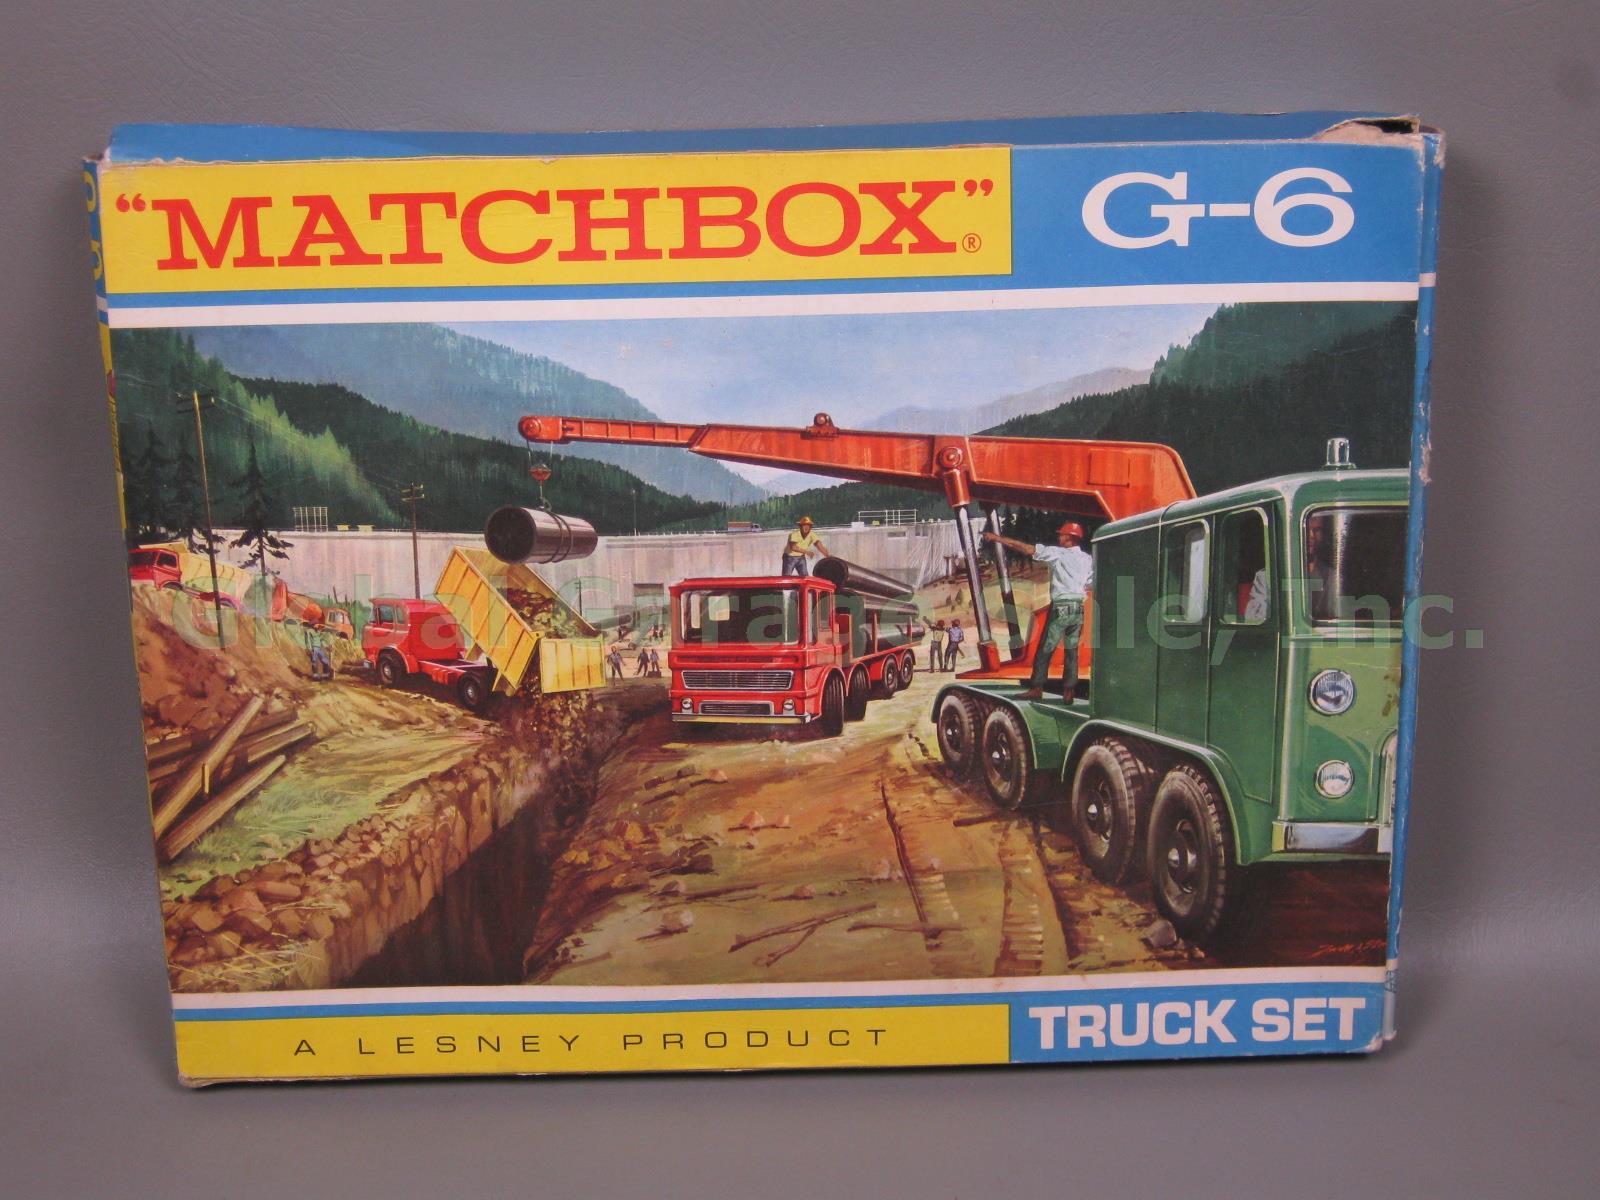 Vtg 1970 Matchbox Lesney G-6 Diecast Toy Truck Gift Set In Original Box No Logs 4